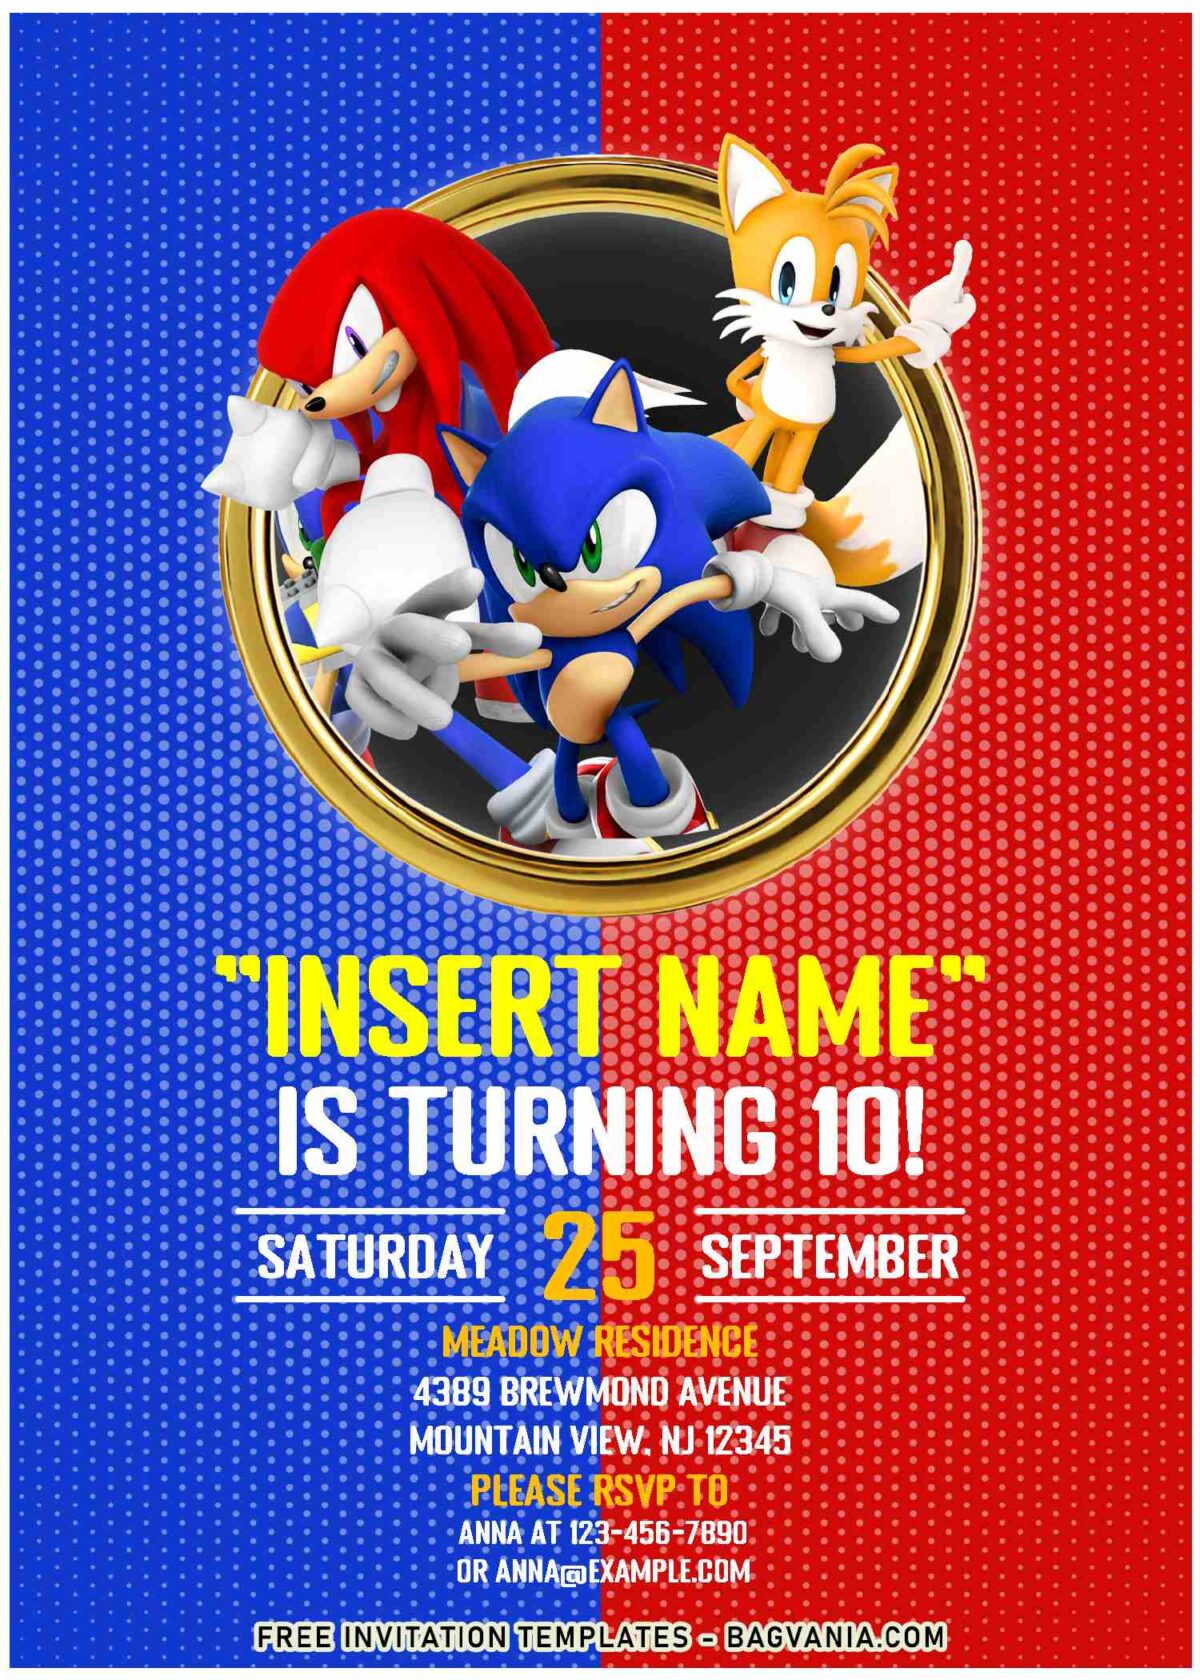 (Free Editable PDF) Sonic The Hedgehog Movie Themed Birthday Invitation Templates with editable text